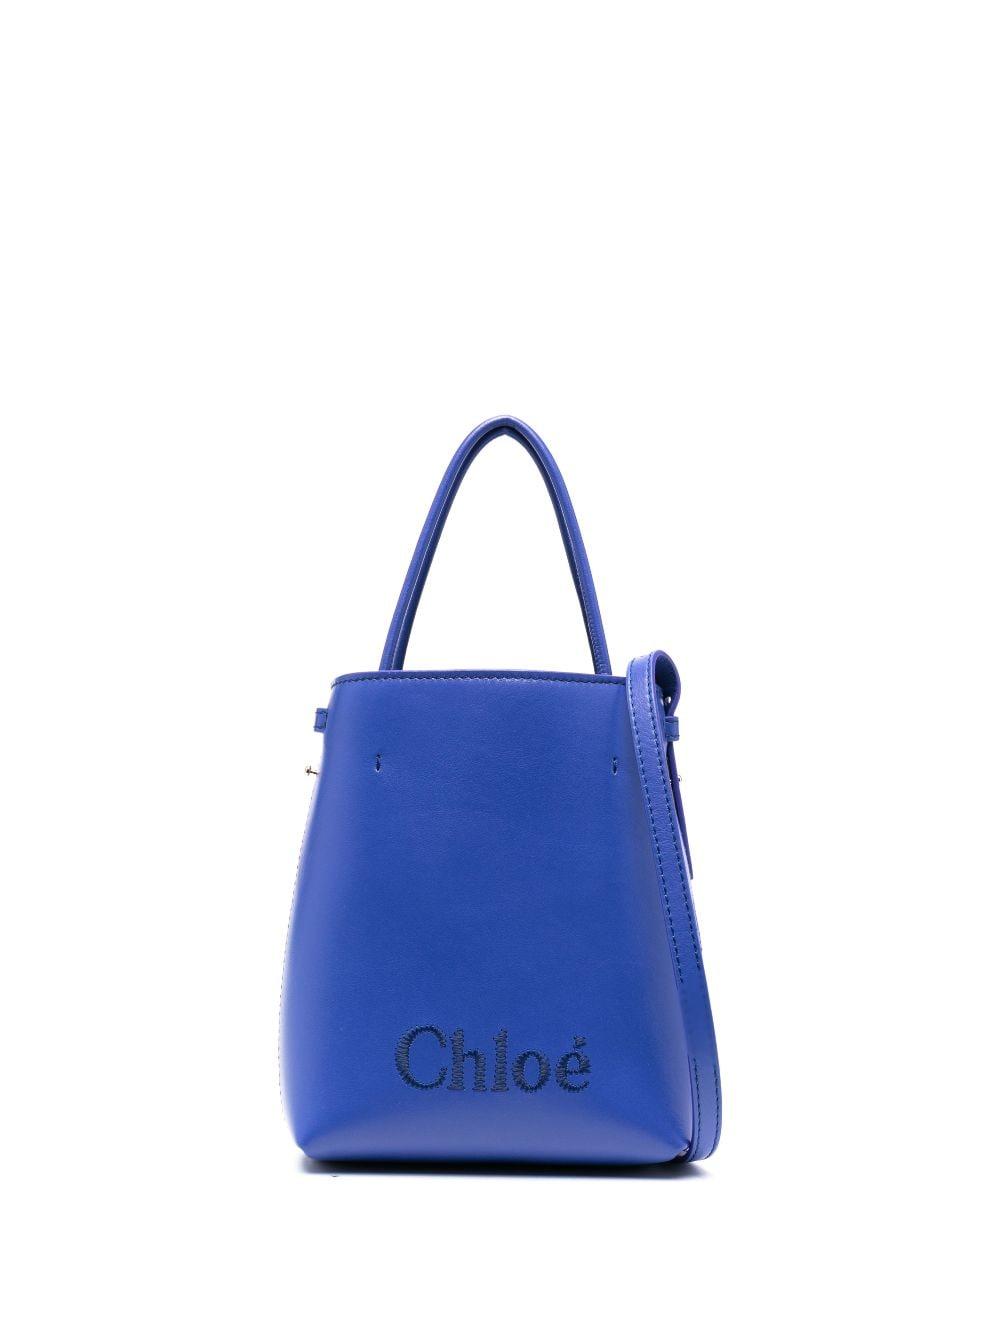 Chloé Sense Micro Tote Bag in Blue | Lyst